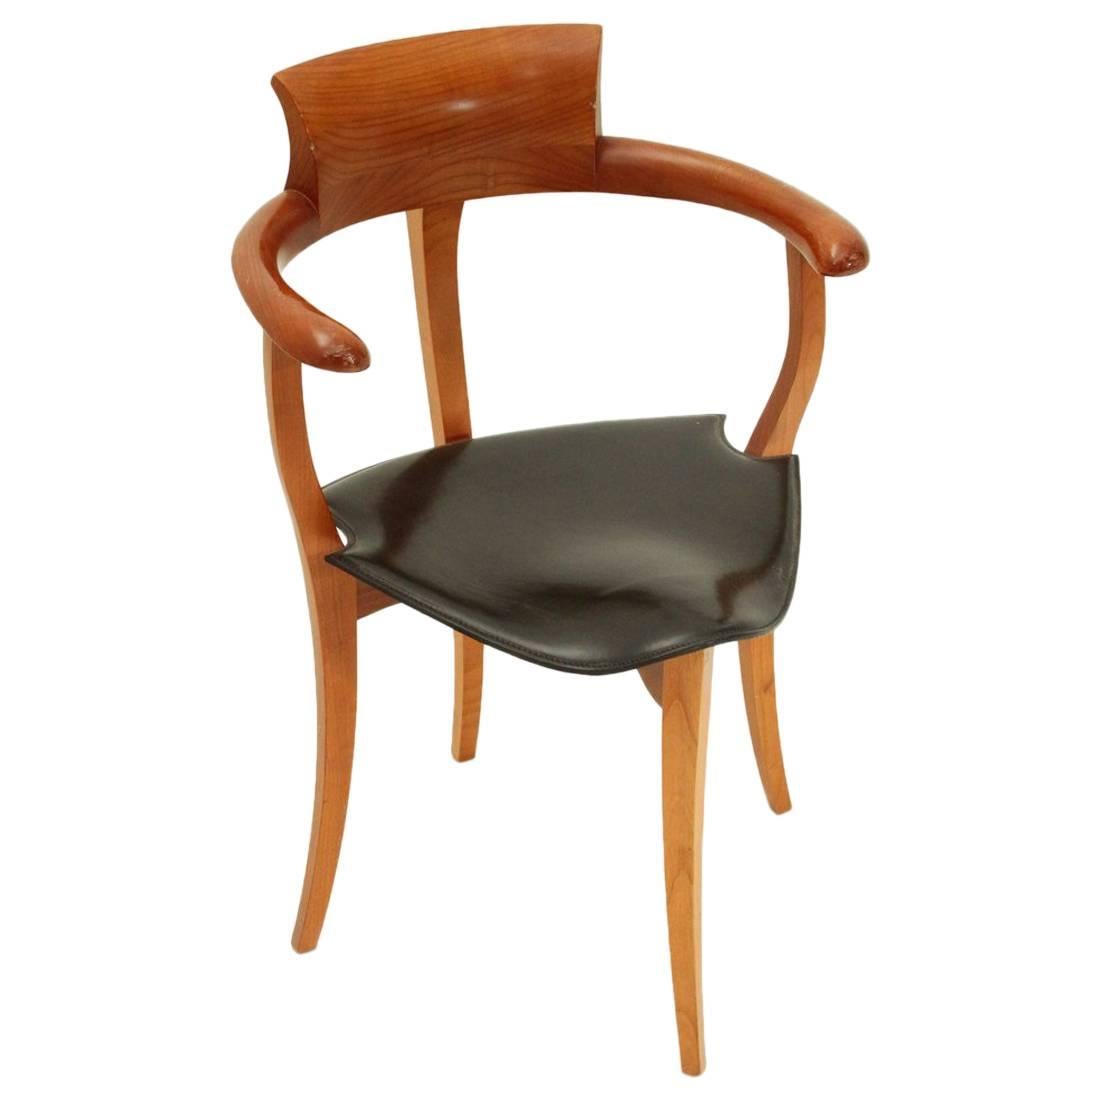 Sedotta Chair by David Palterer for Acerbis, 1990s